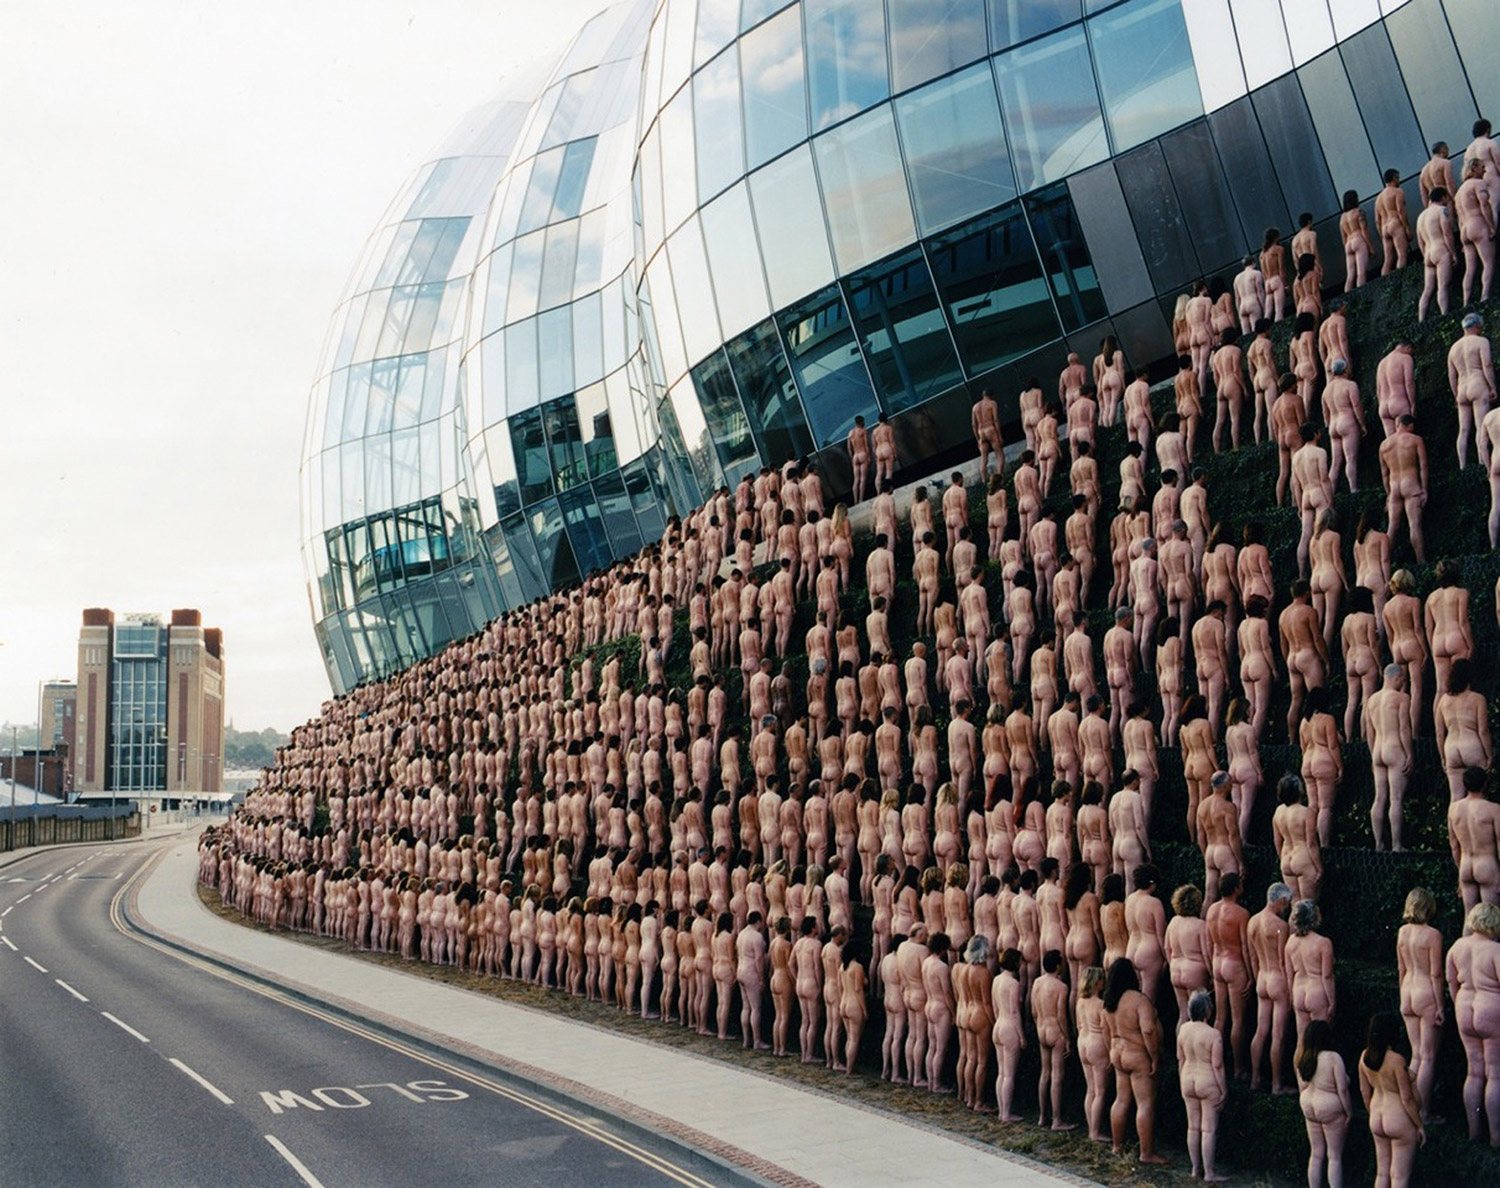 Spencer Tunick - nude body installation at Newcastle/Gateshead